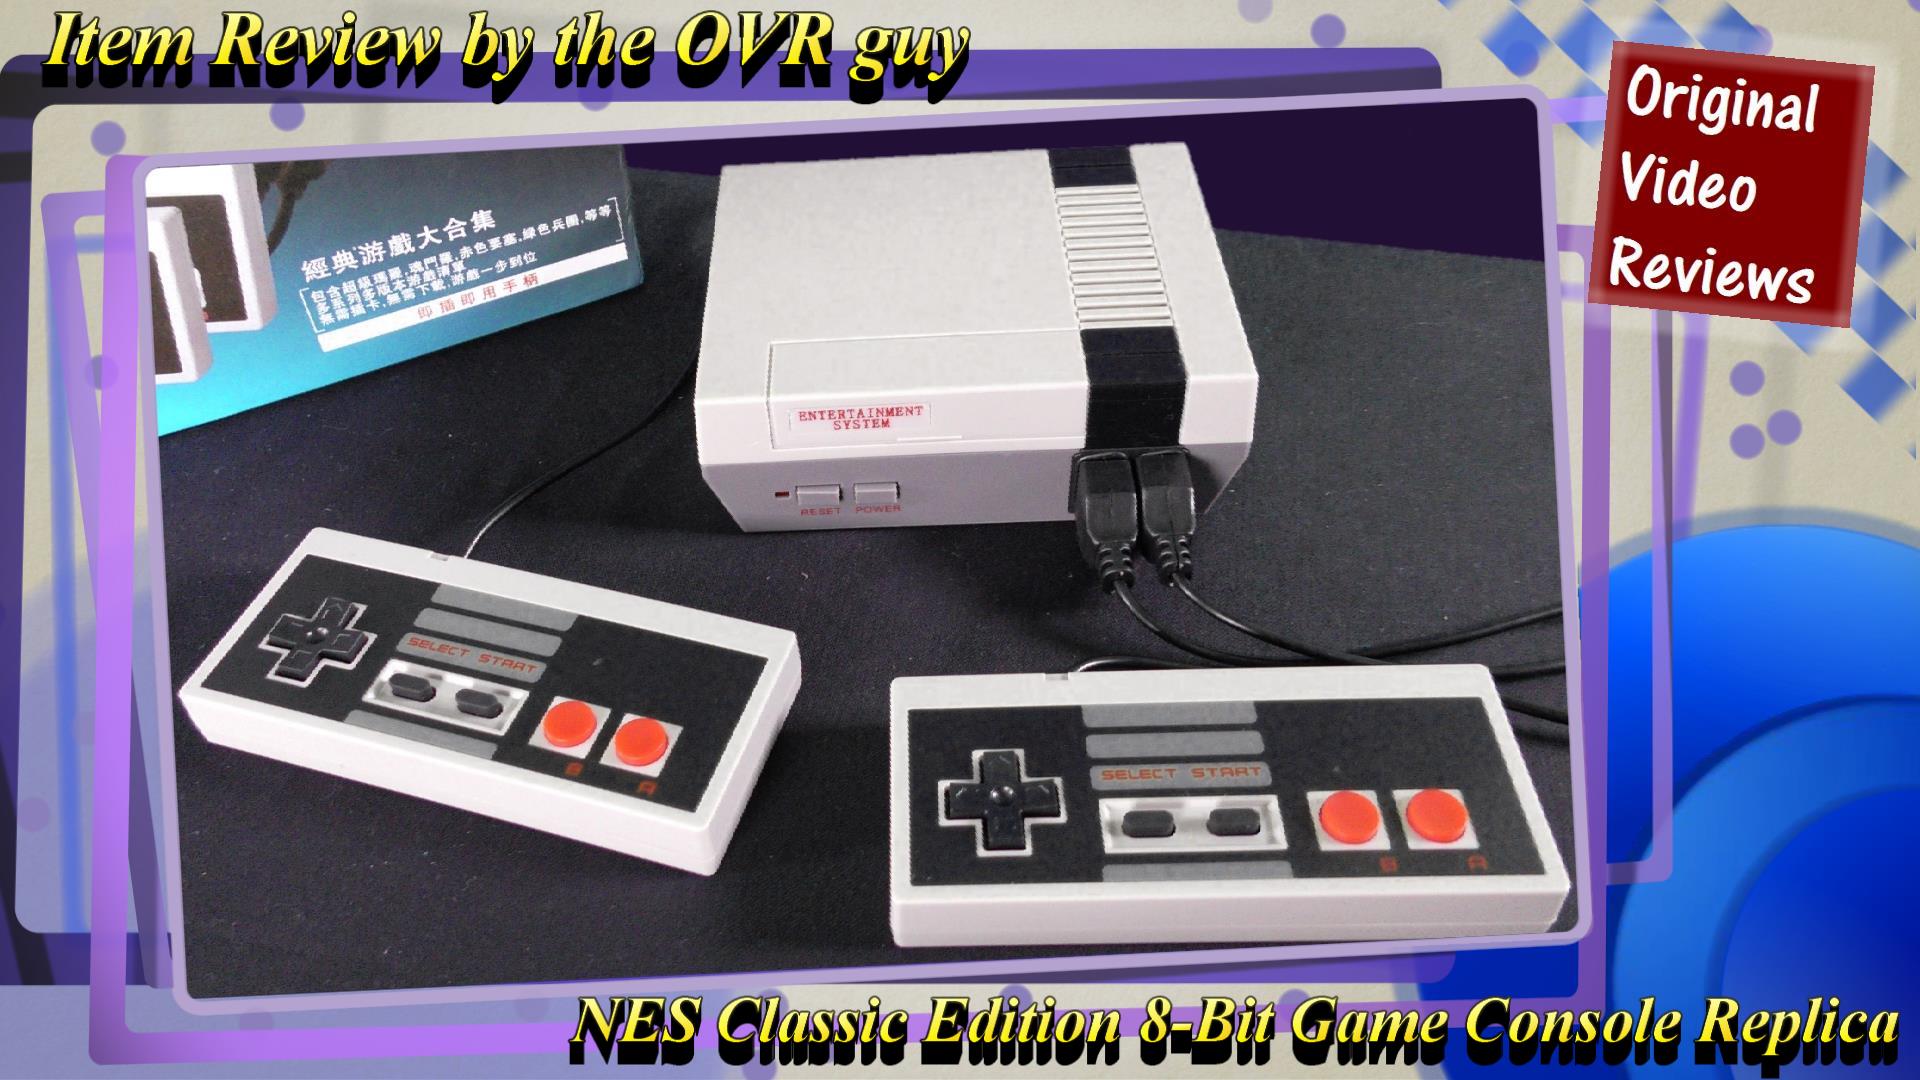 500-in-1 NES Edition Replica (Review) - Original Video